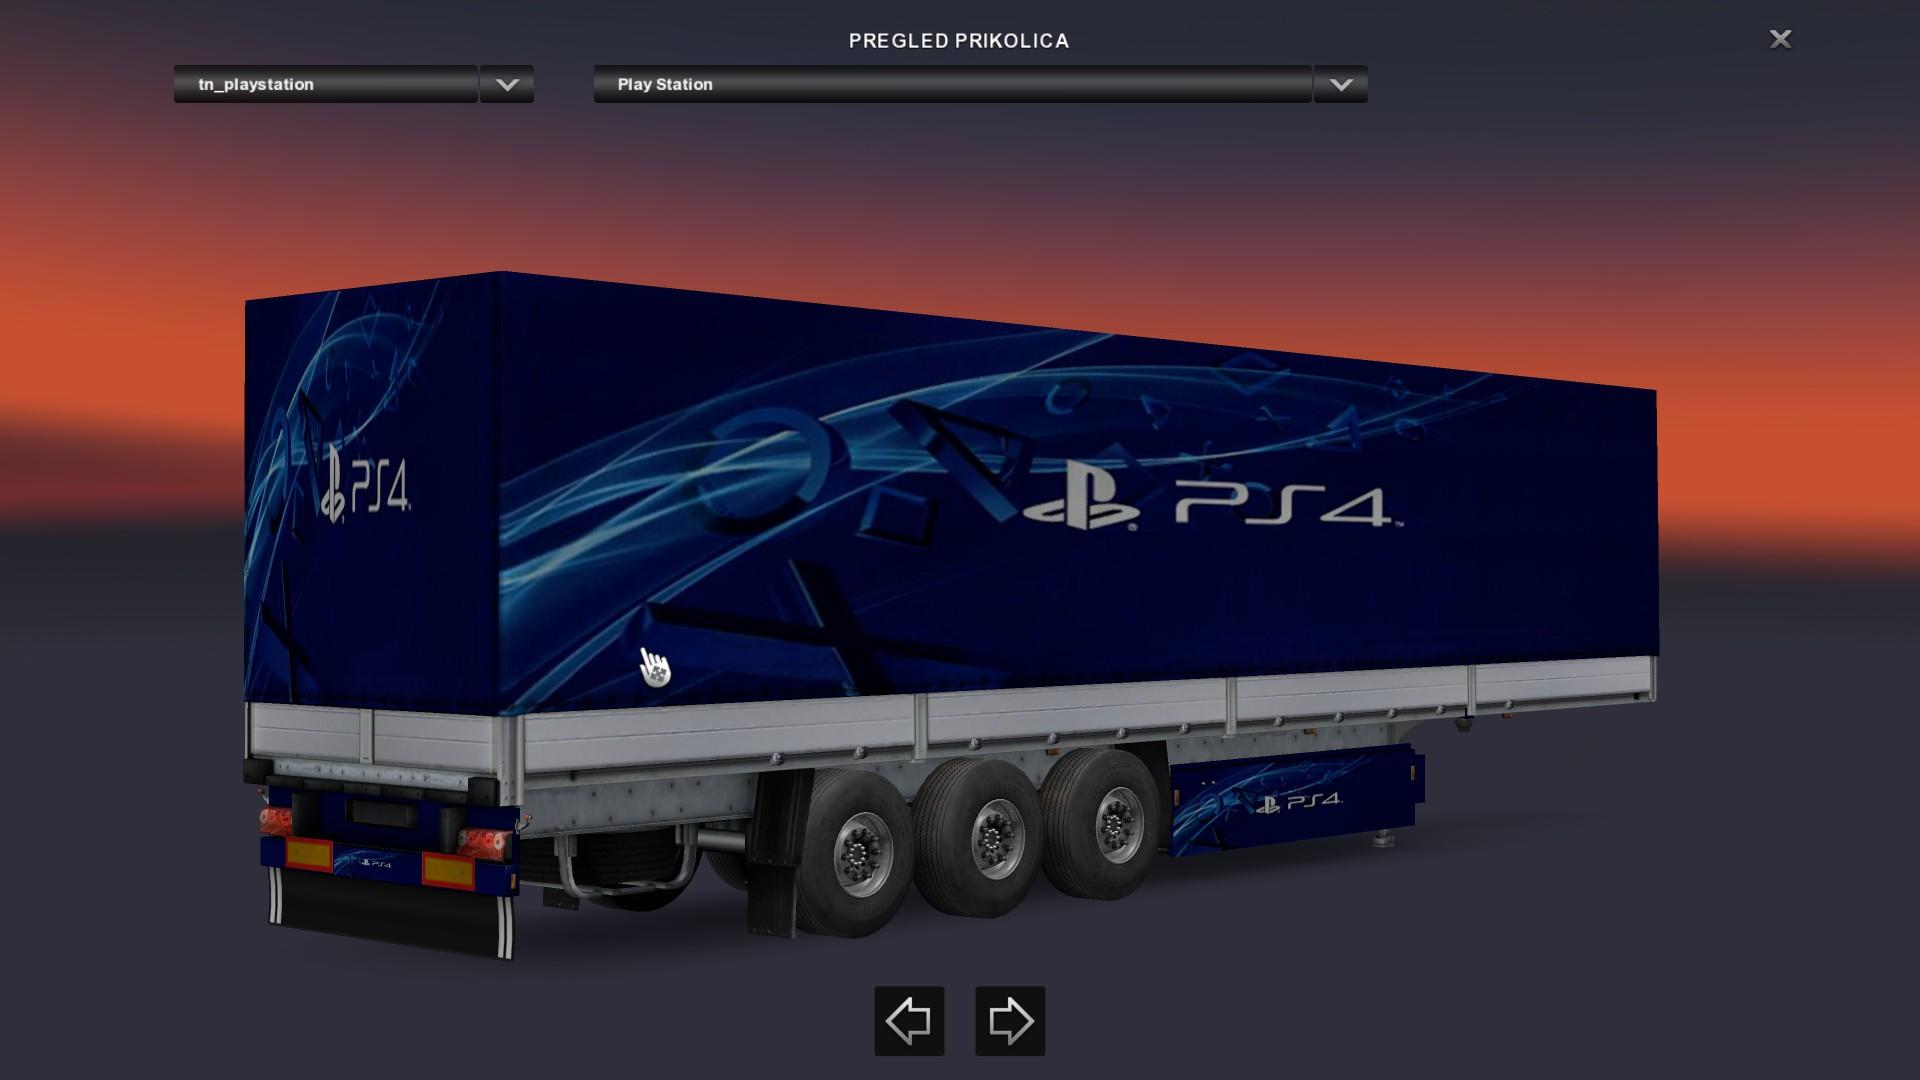 american truck simulator for ps4